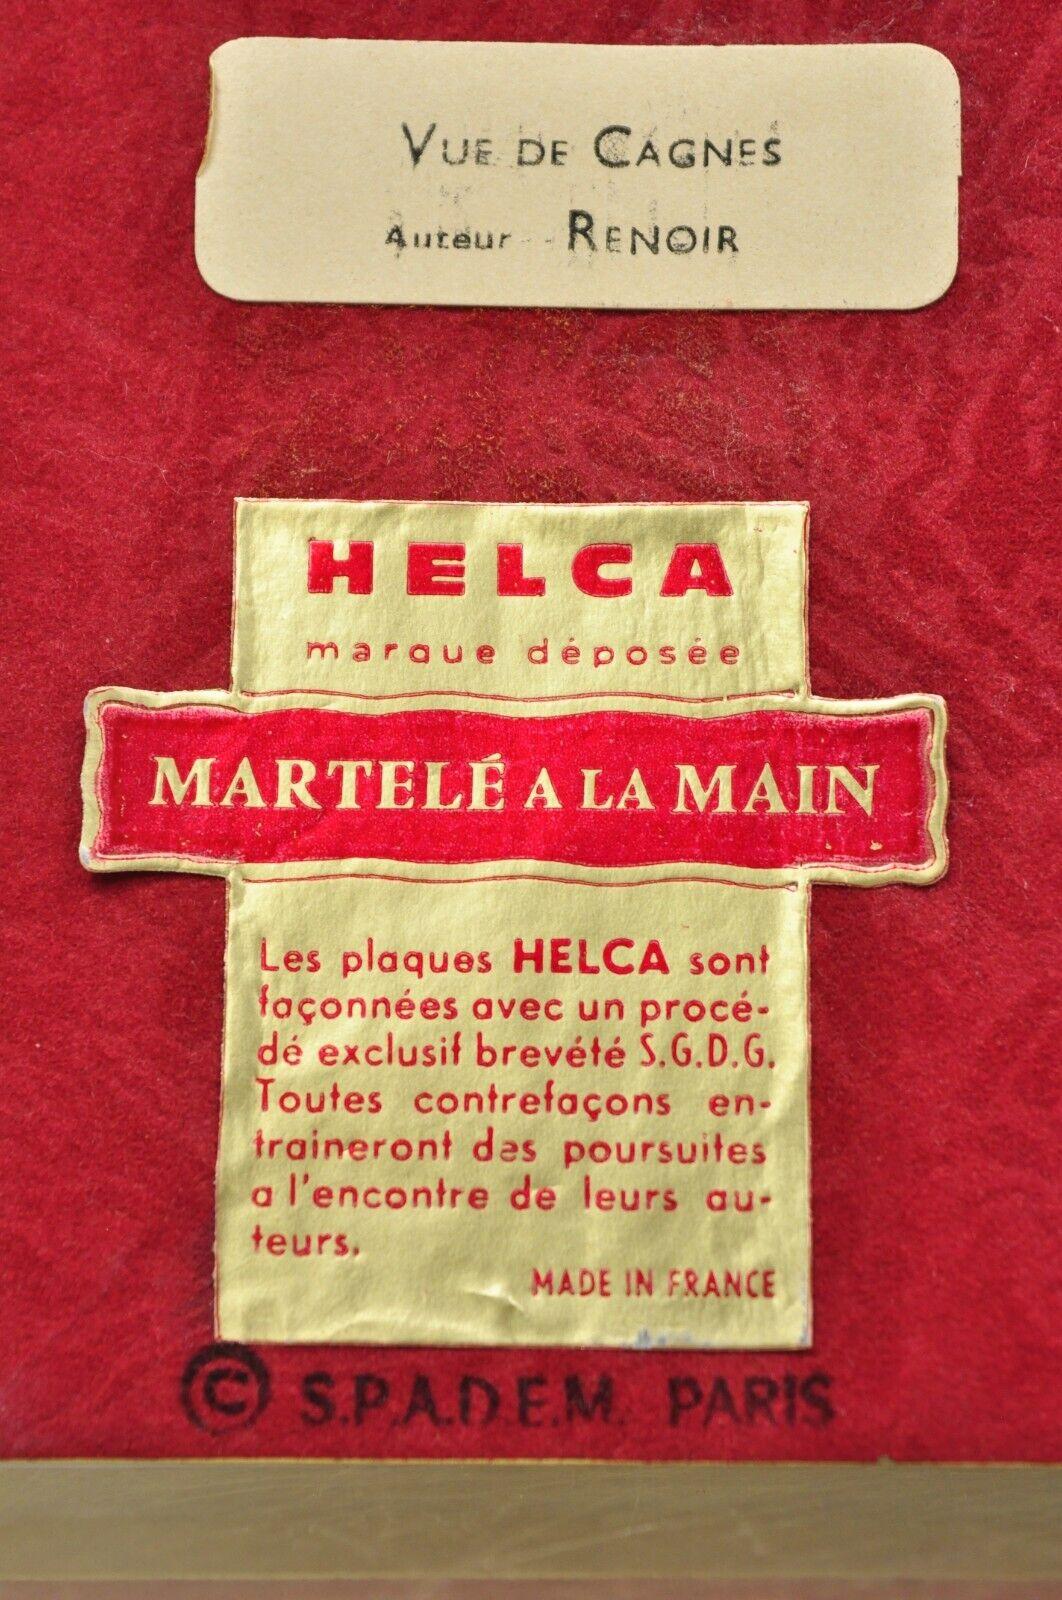 Helca Martele A La Main - Peinture en émail martelé - Renoir - Vue de Cagnes en vente 1